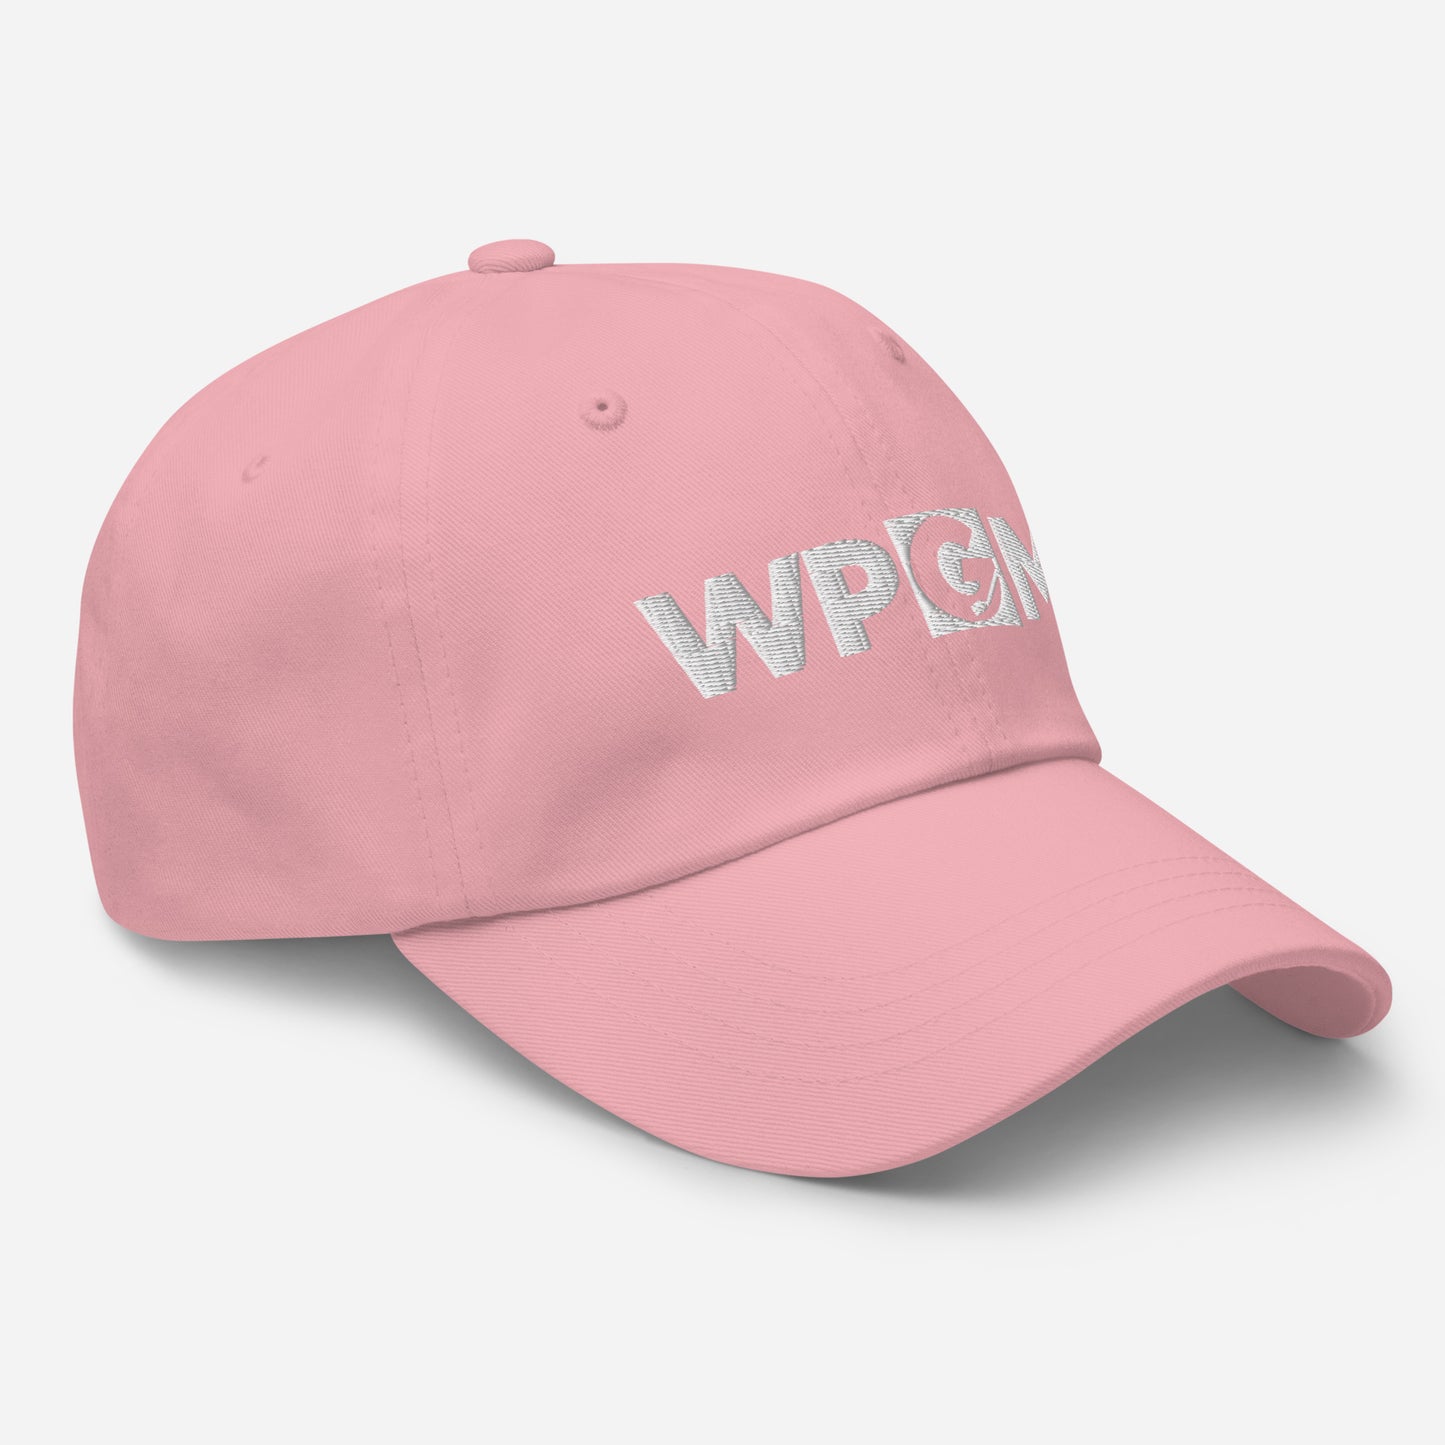 WPGM Classic (White Logo) Dad Hat